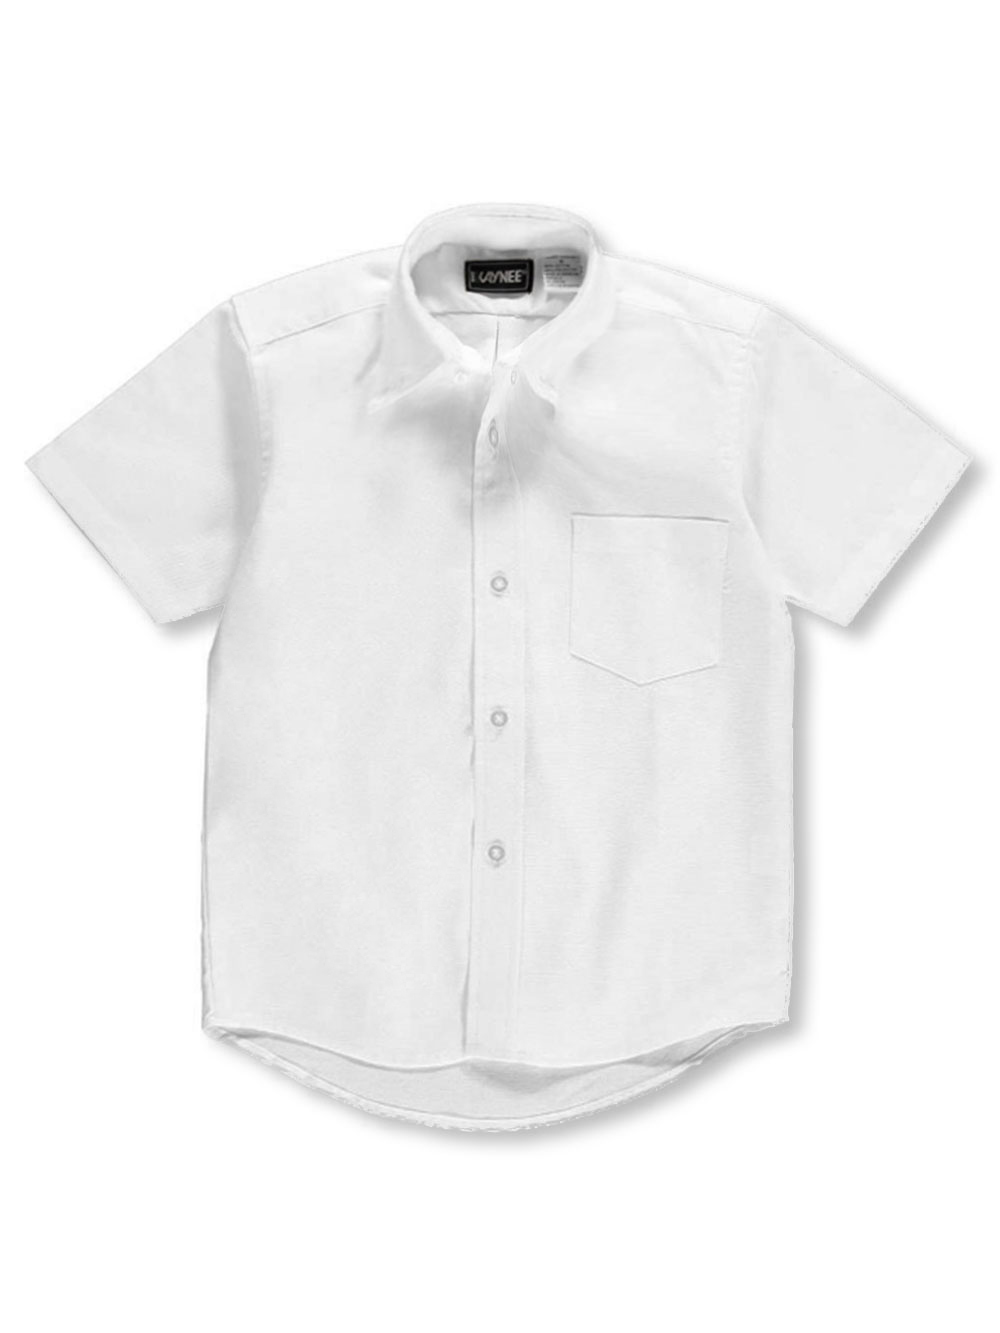 RIFLE KAYNEE Boys Button-Down Shirt 